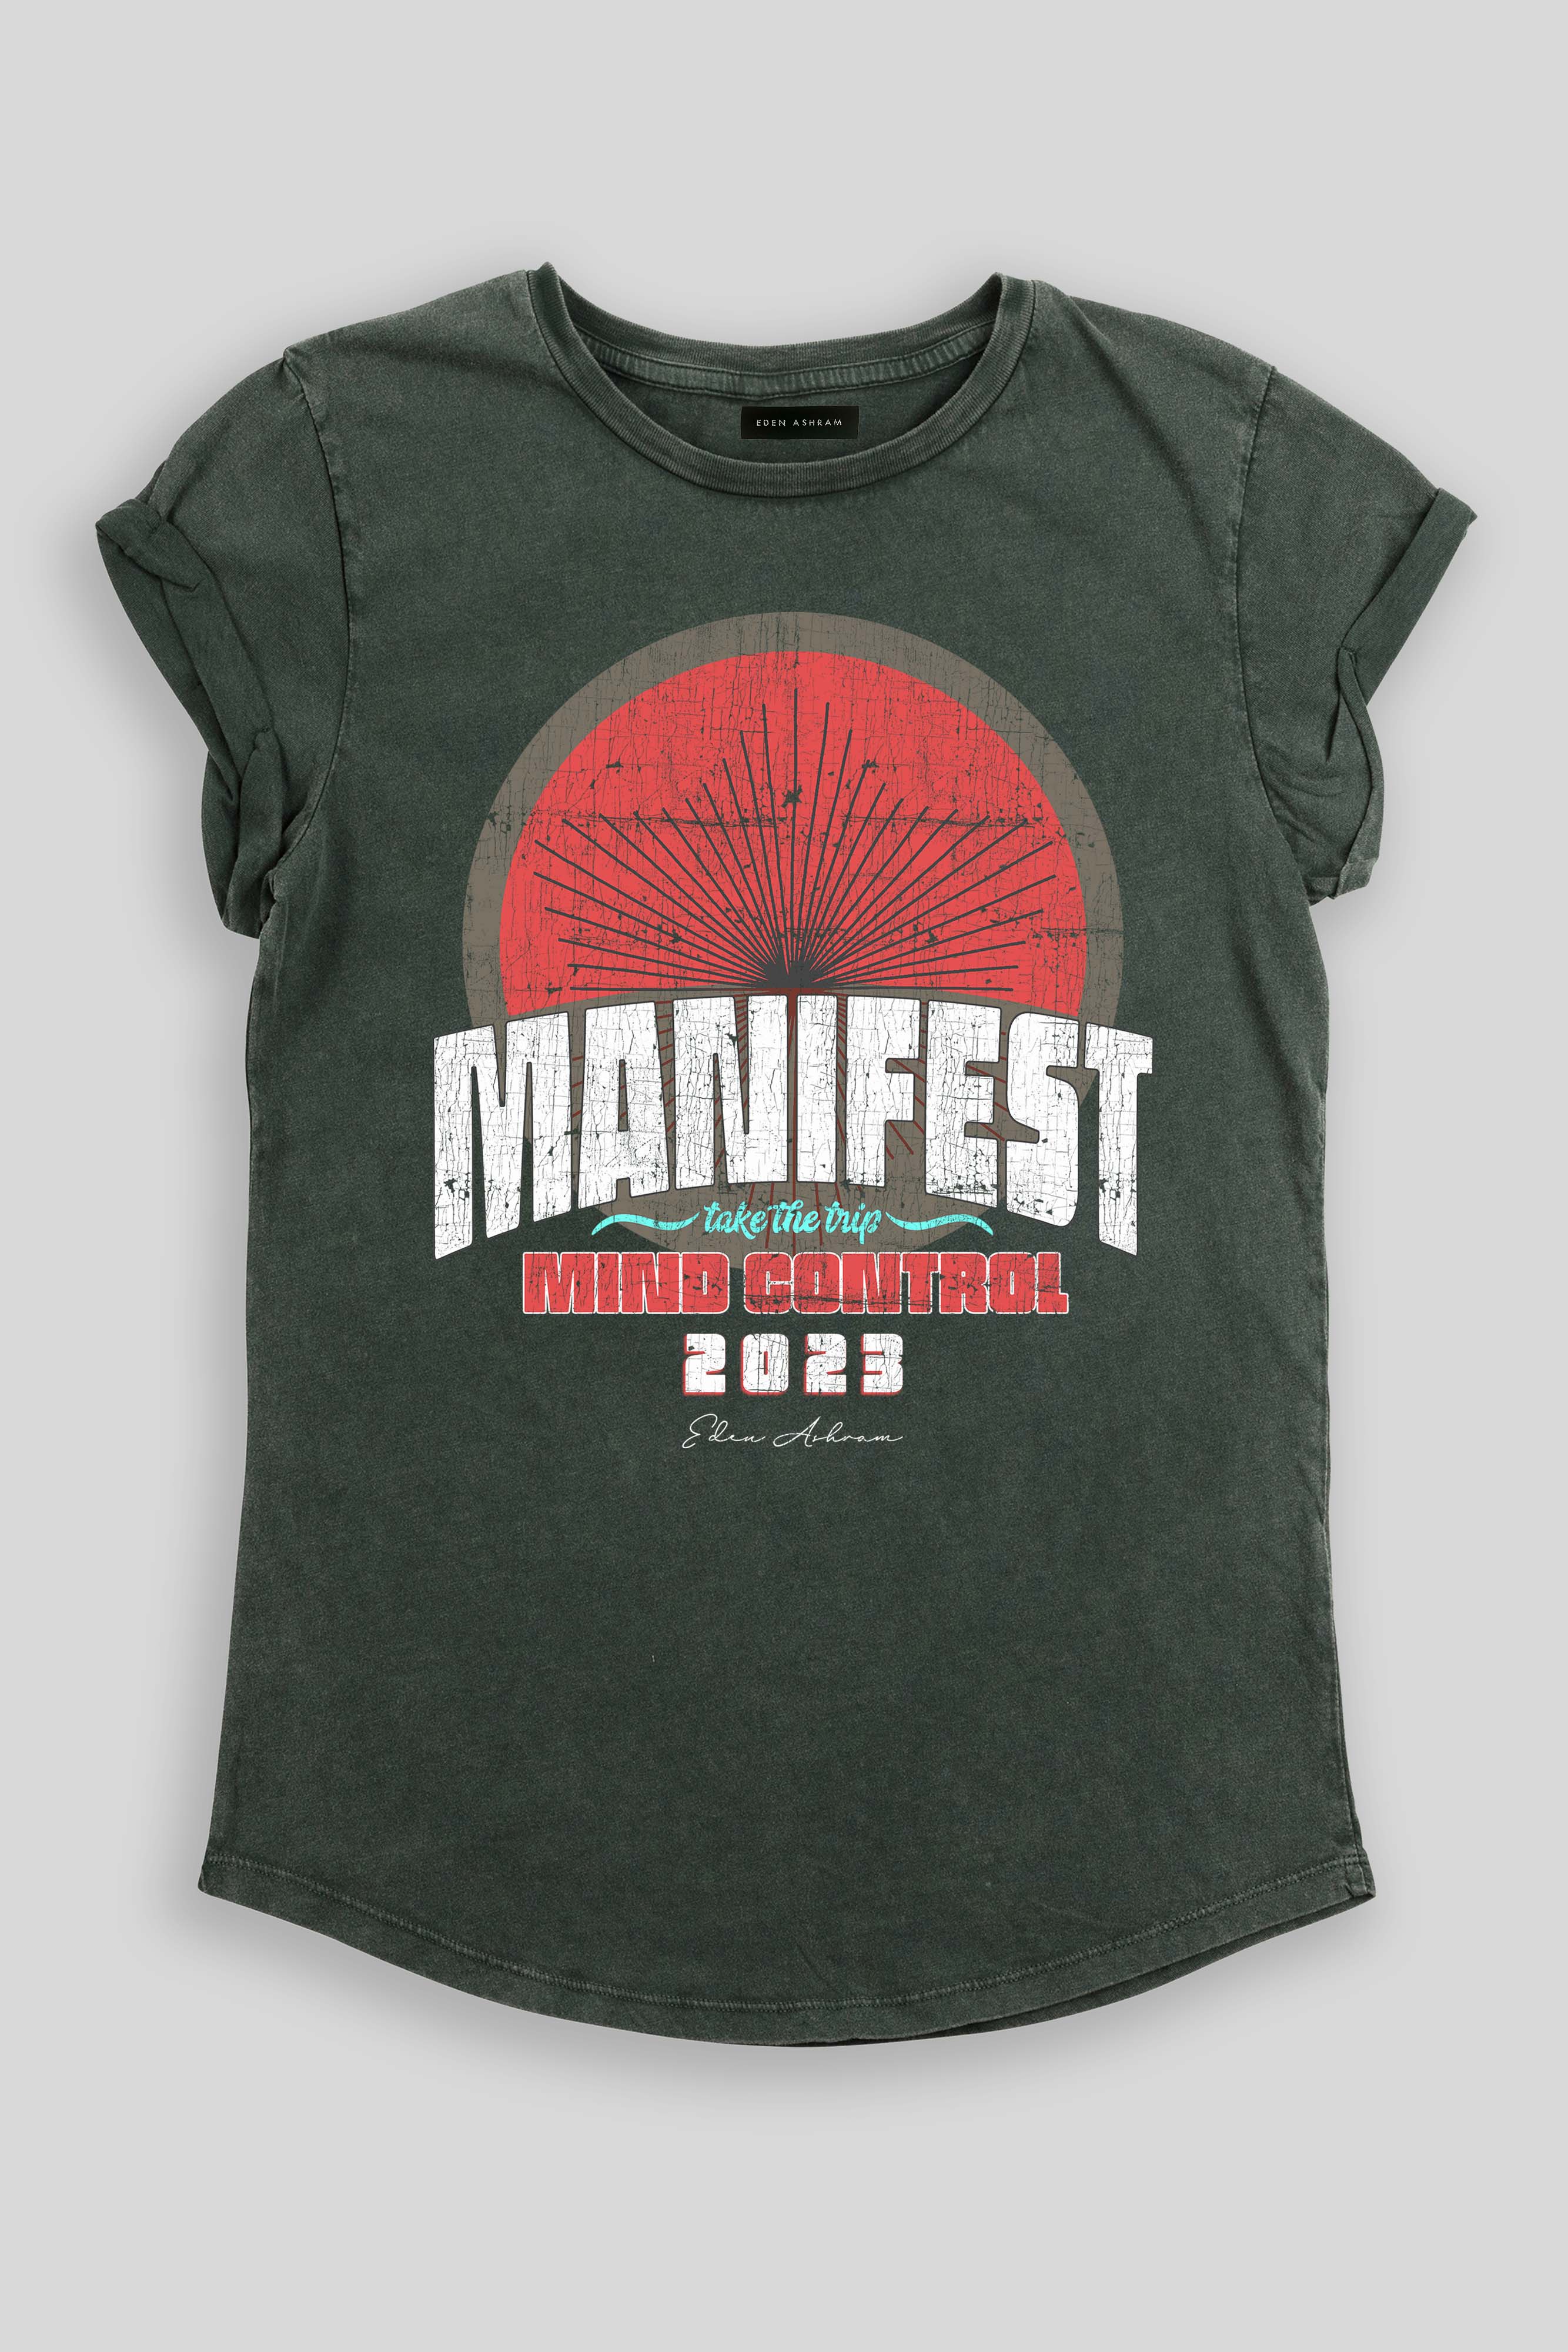 EDEN ASHRAM Manifest Rolled Sleeve Tour T-Shirt Stonewash Green | 2023 Manifest